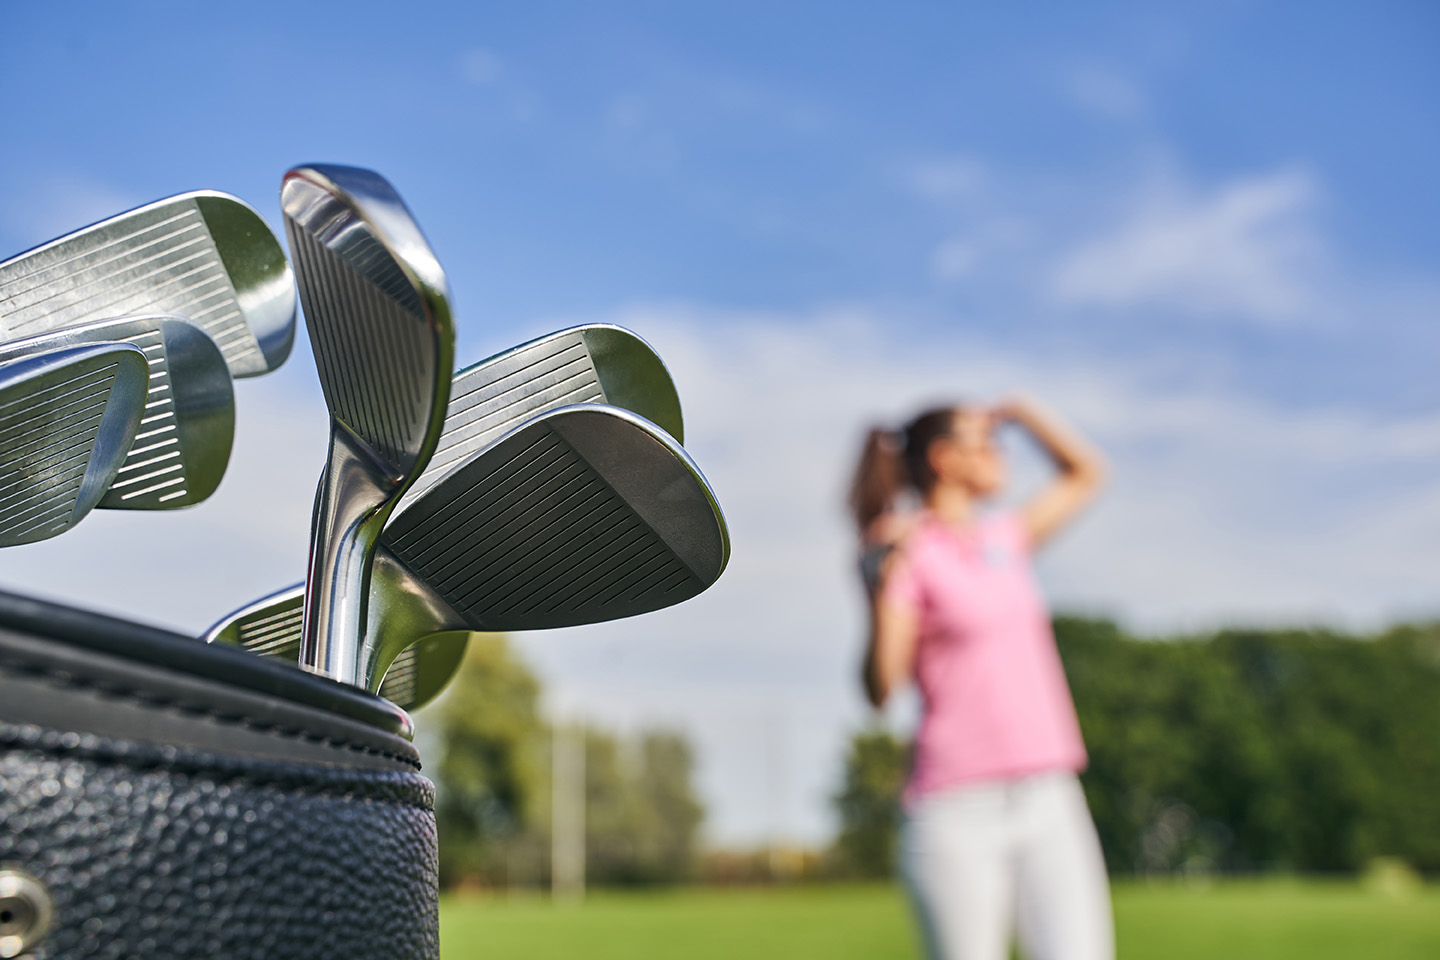 Girl Standing next to Golf Bag